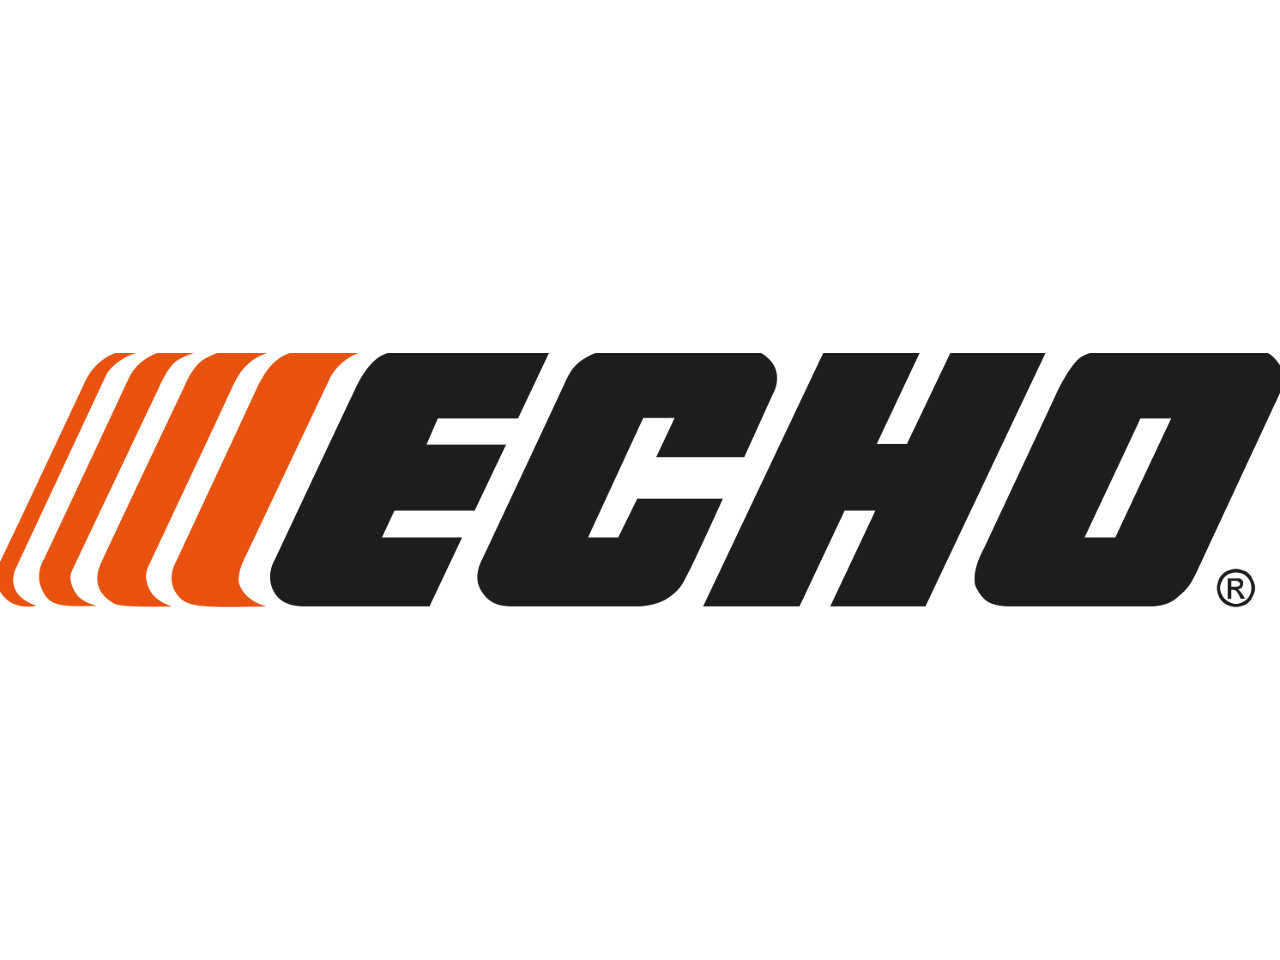 Echo HC-2210, HC-2810, Shindaiwa DH232, DH235 Guide, Exhaust New Oem A313001850